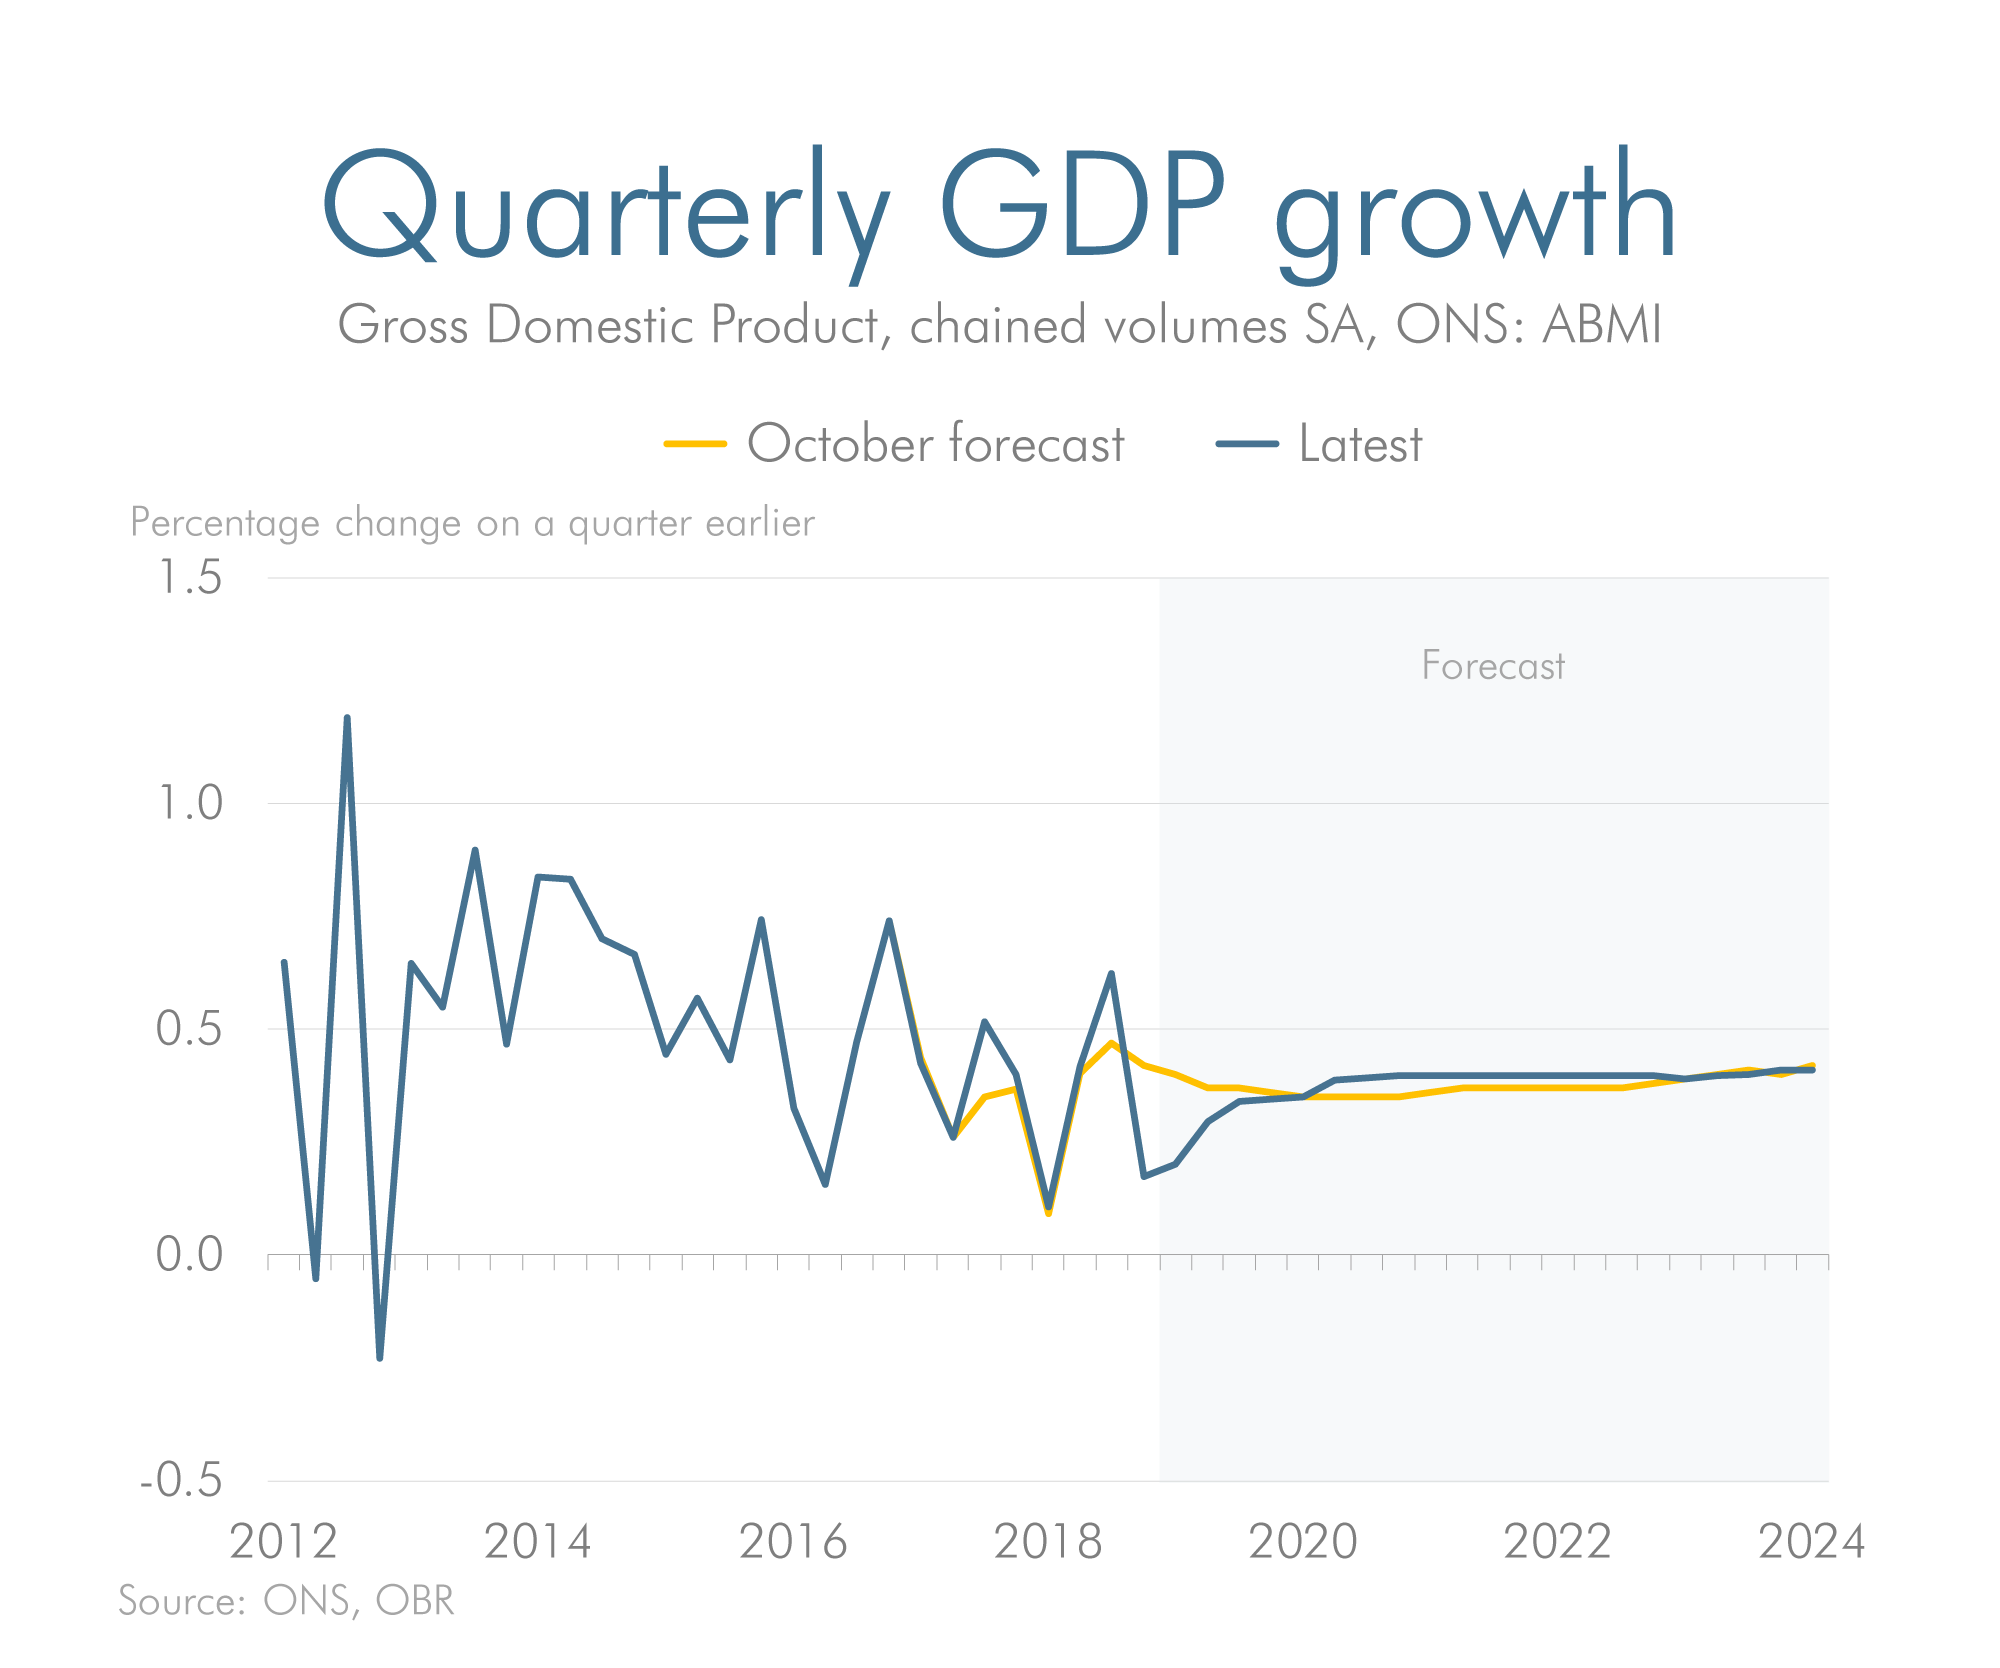 Latest forecast versus previous forecast for quarterly GDP growth